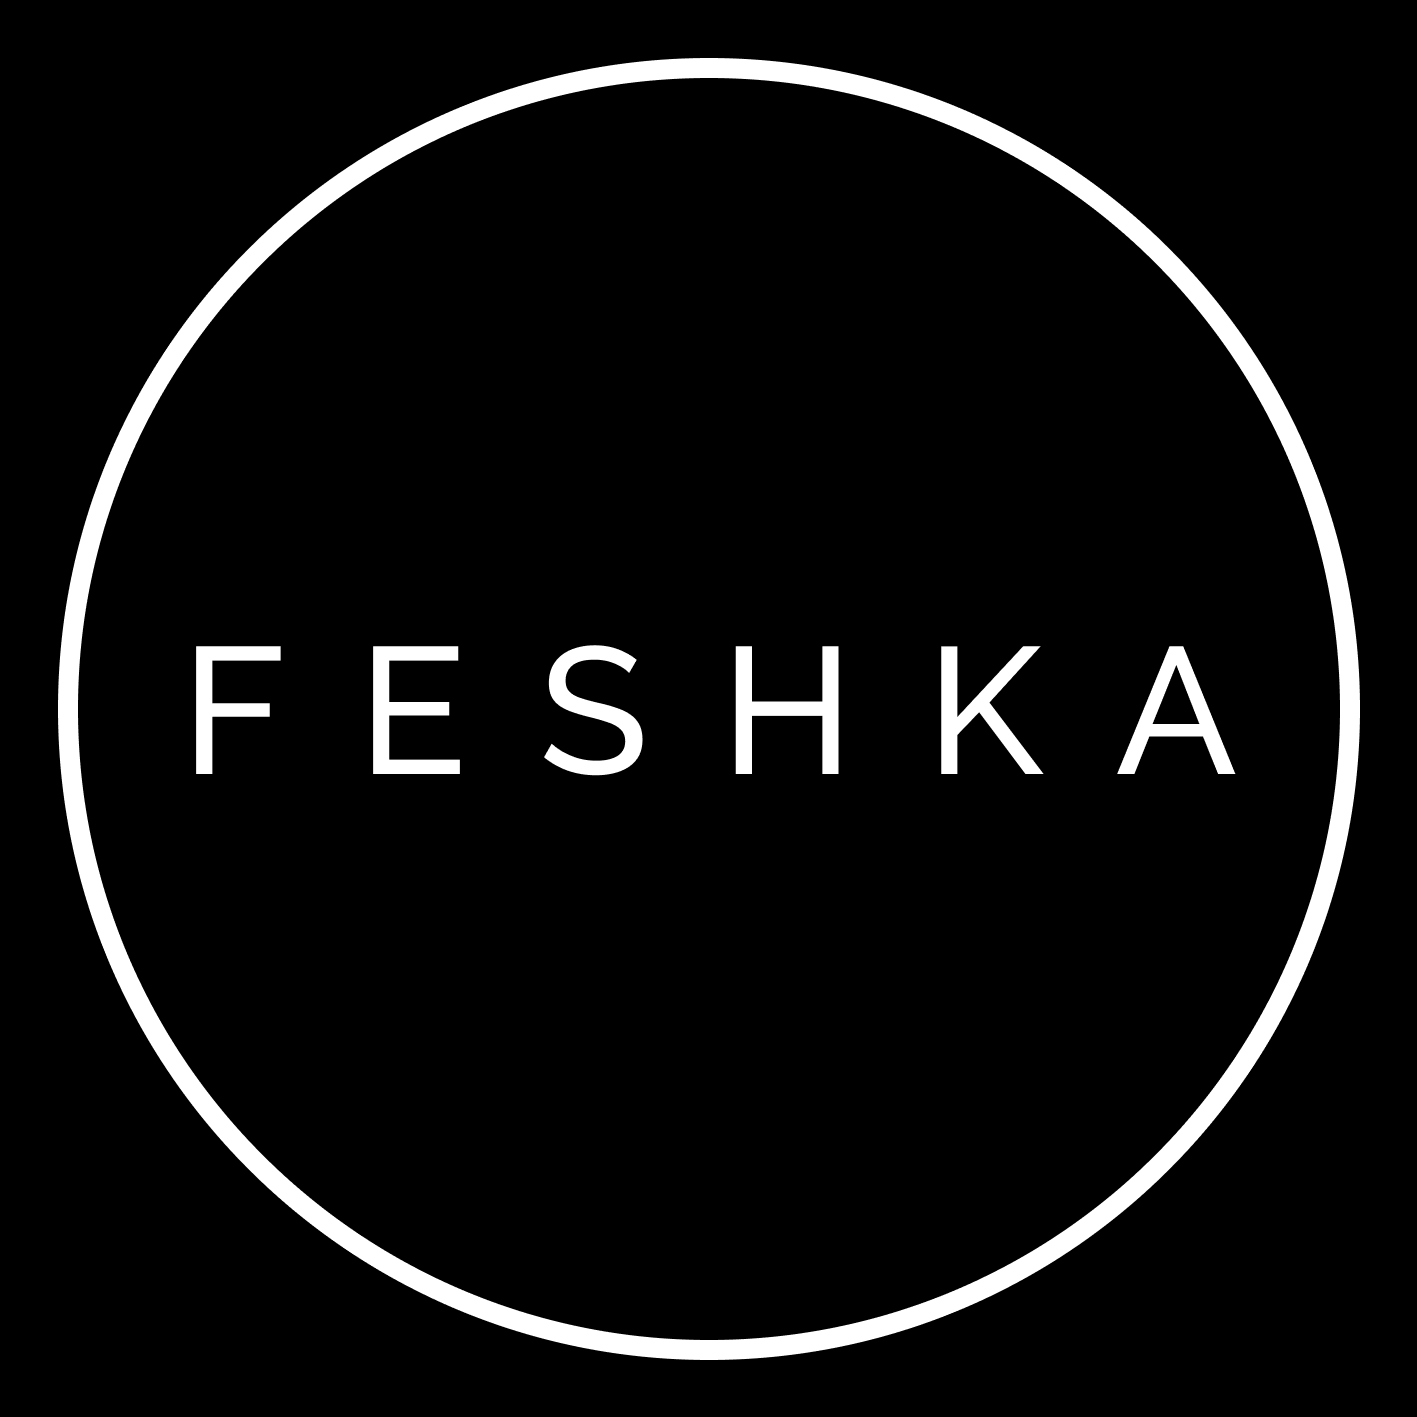 Feshka